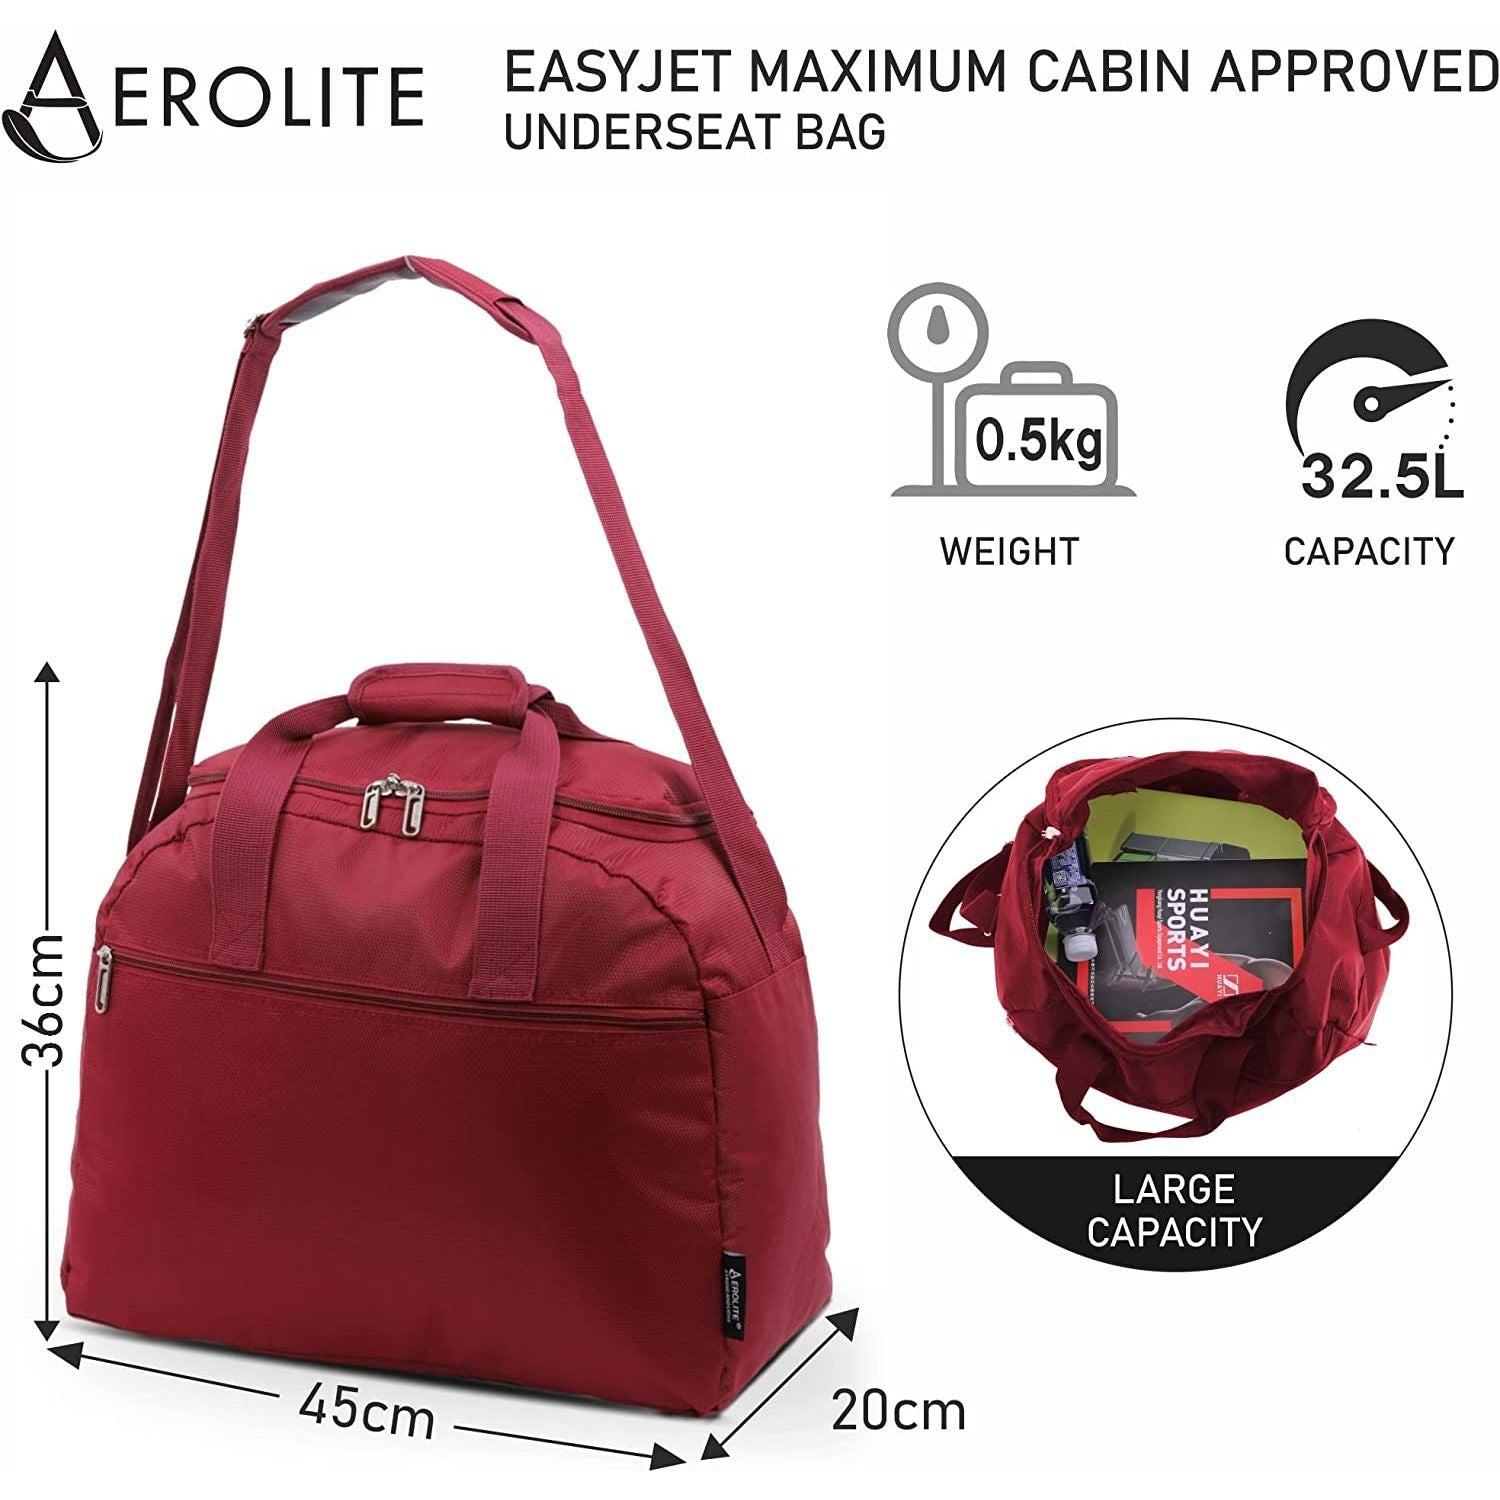 Aerolite 45x36x20 easyJet Maximum Size Hard ShellCarry On Hand Cabin  Luggage Underseat Flight Bag Suitcase 45x36x20 with 4 Wheels set of 2